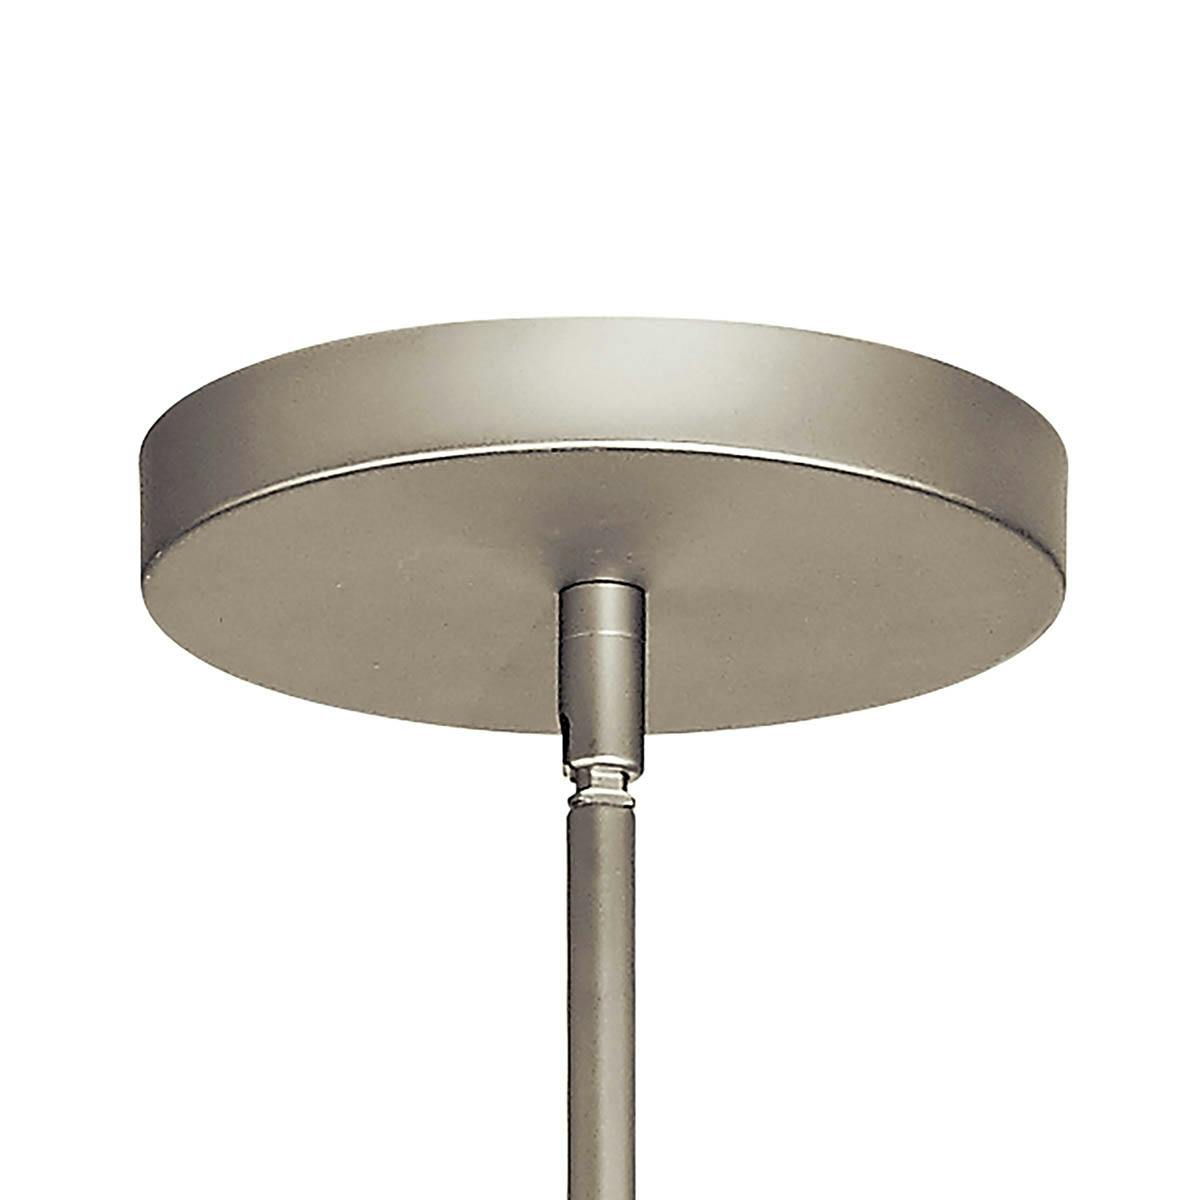 Canopy for the Mercel™ 18" LED Pendant Satin Nickel on a white bakground